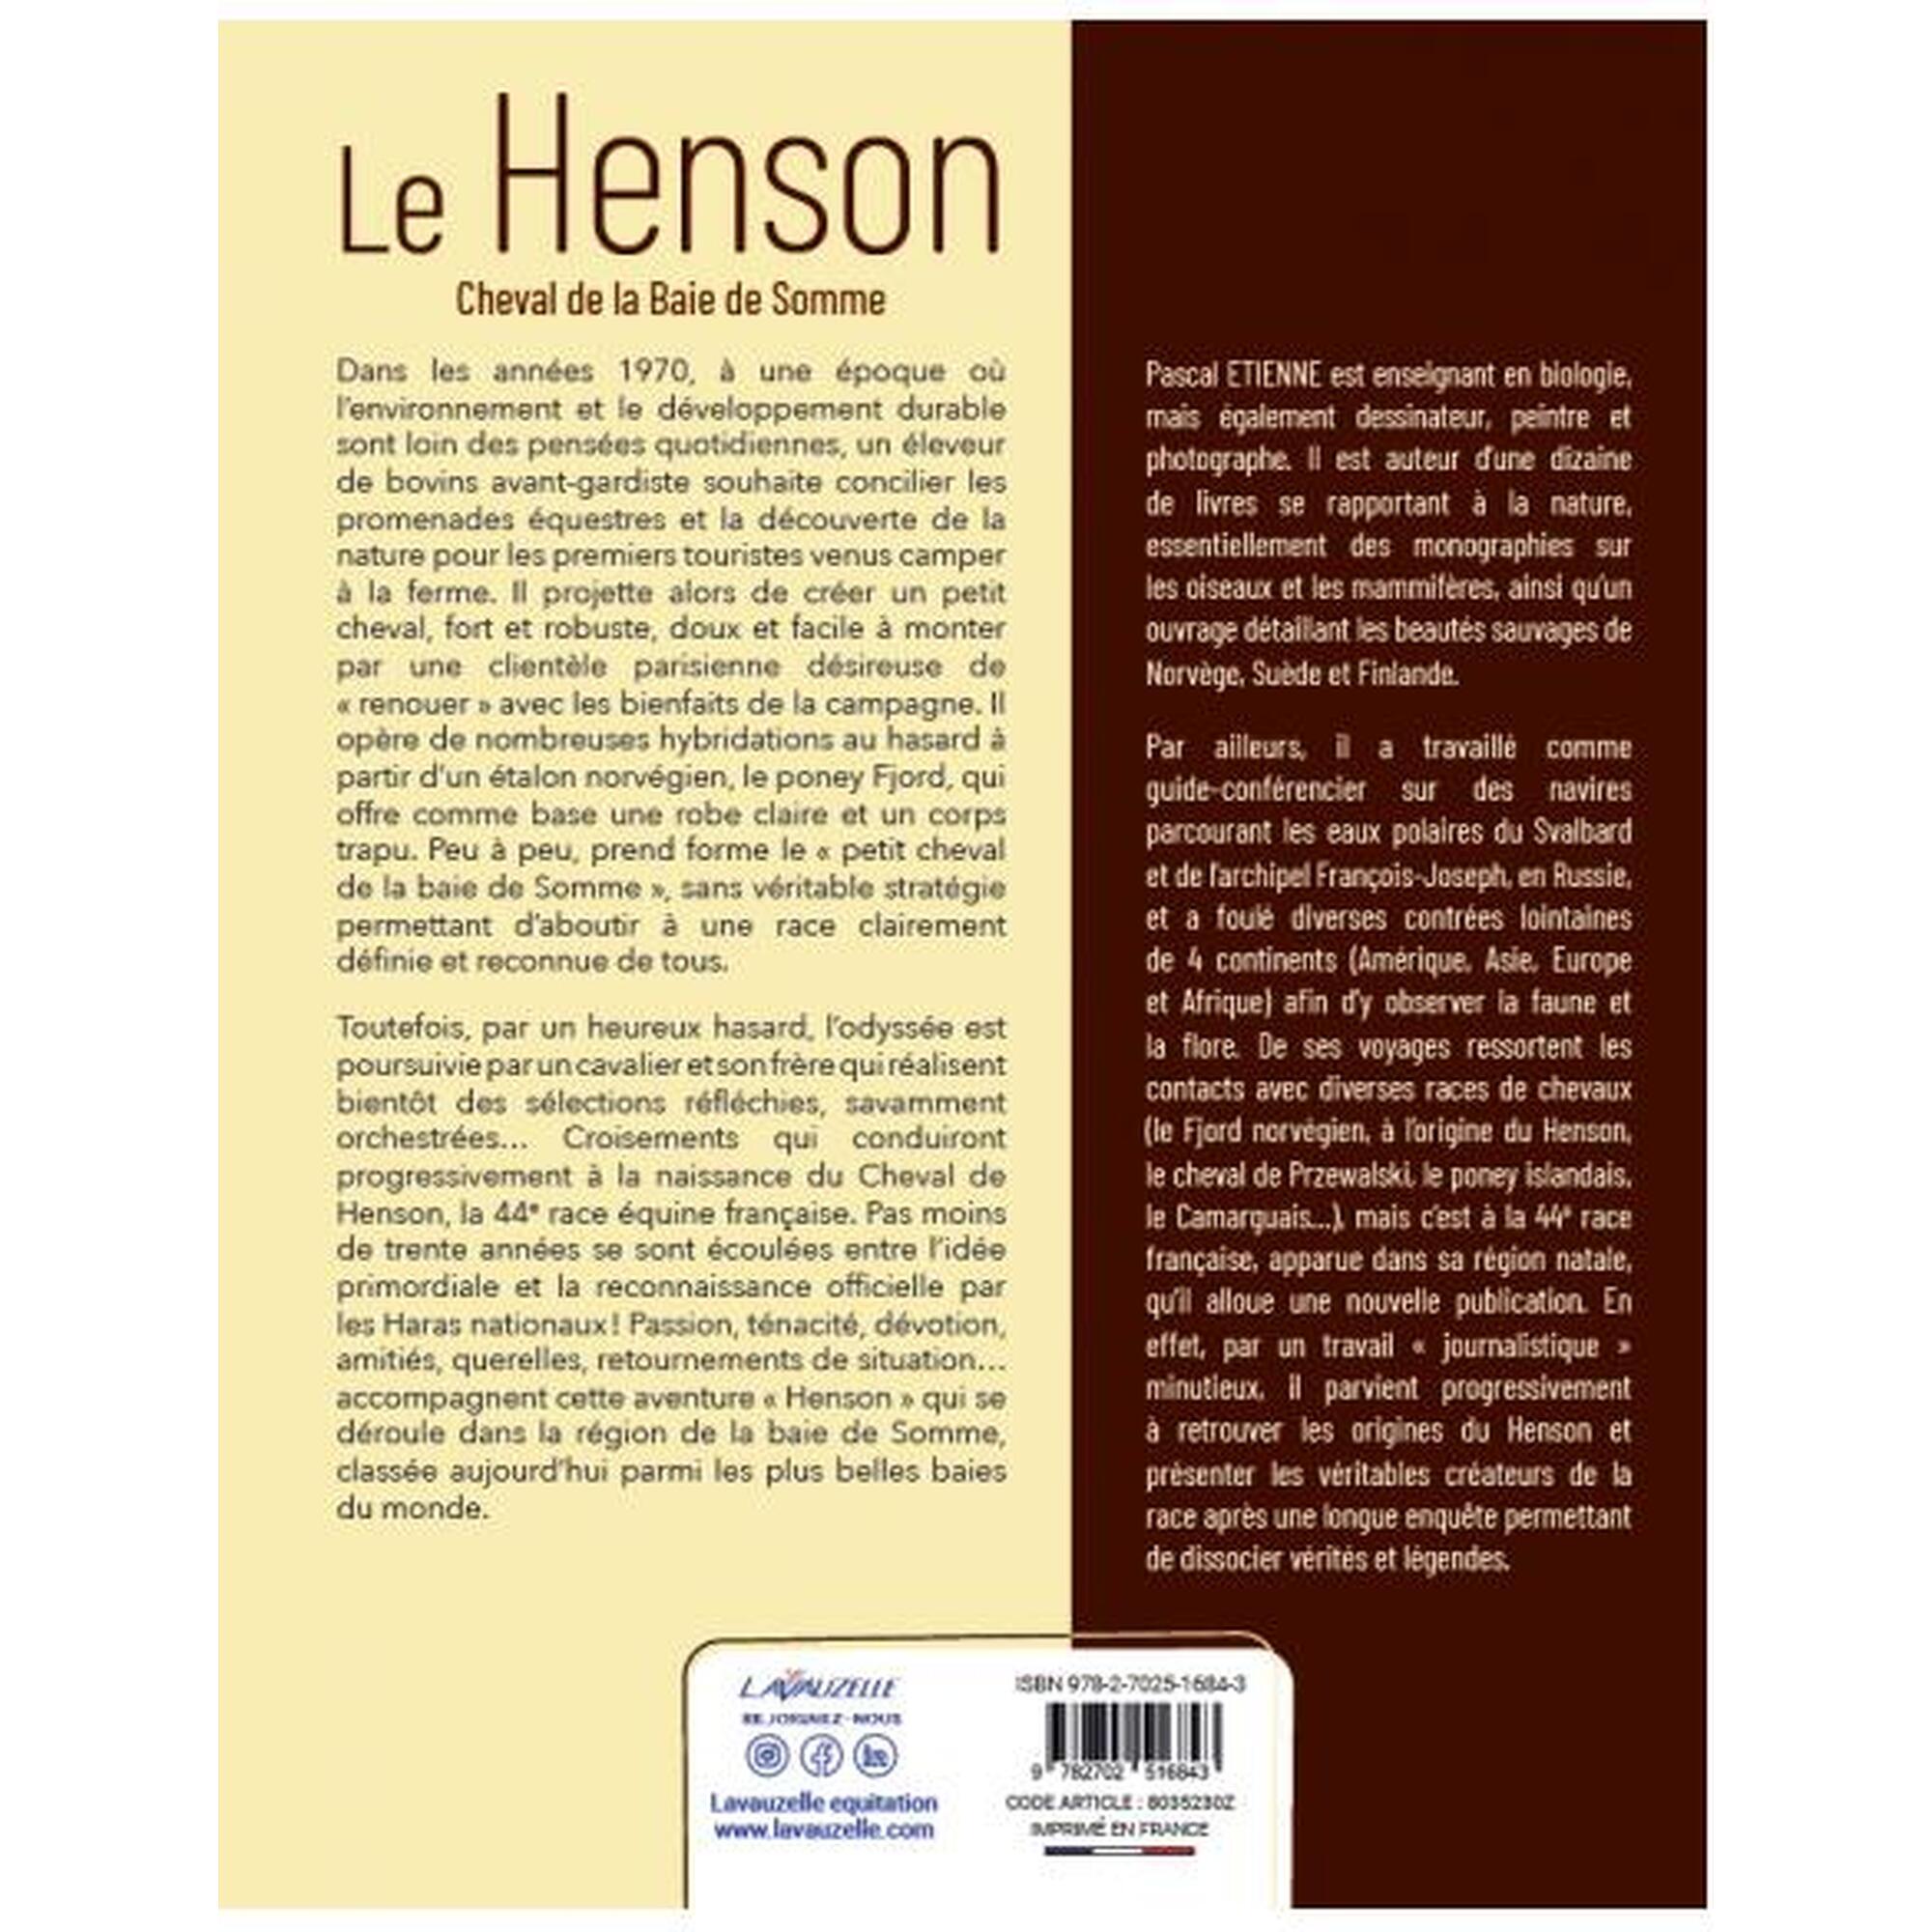 Le Henson - Cheval de la Baie de Somme